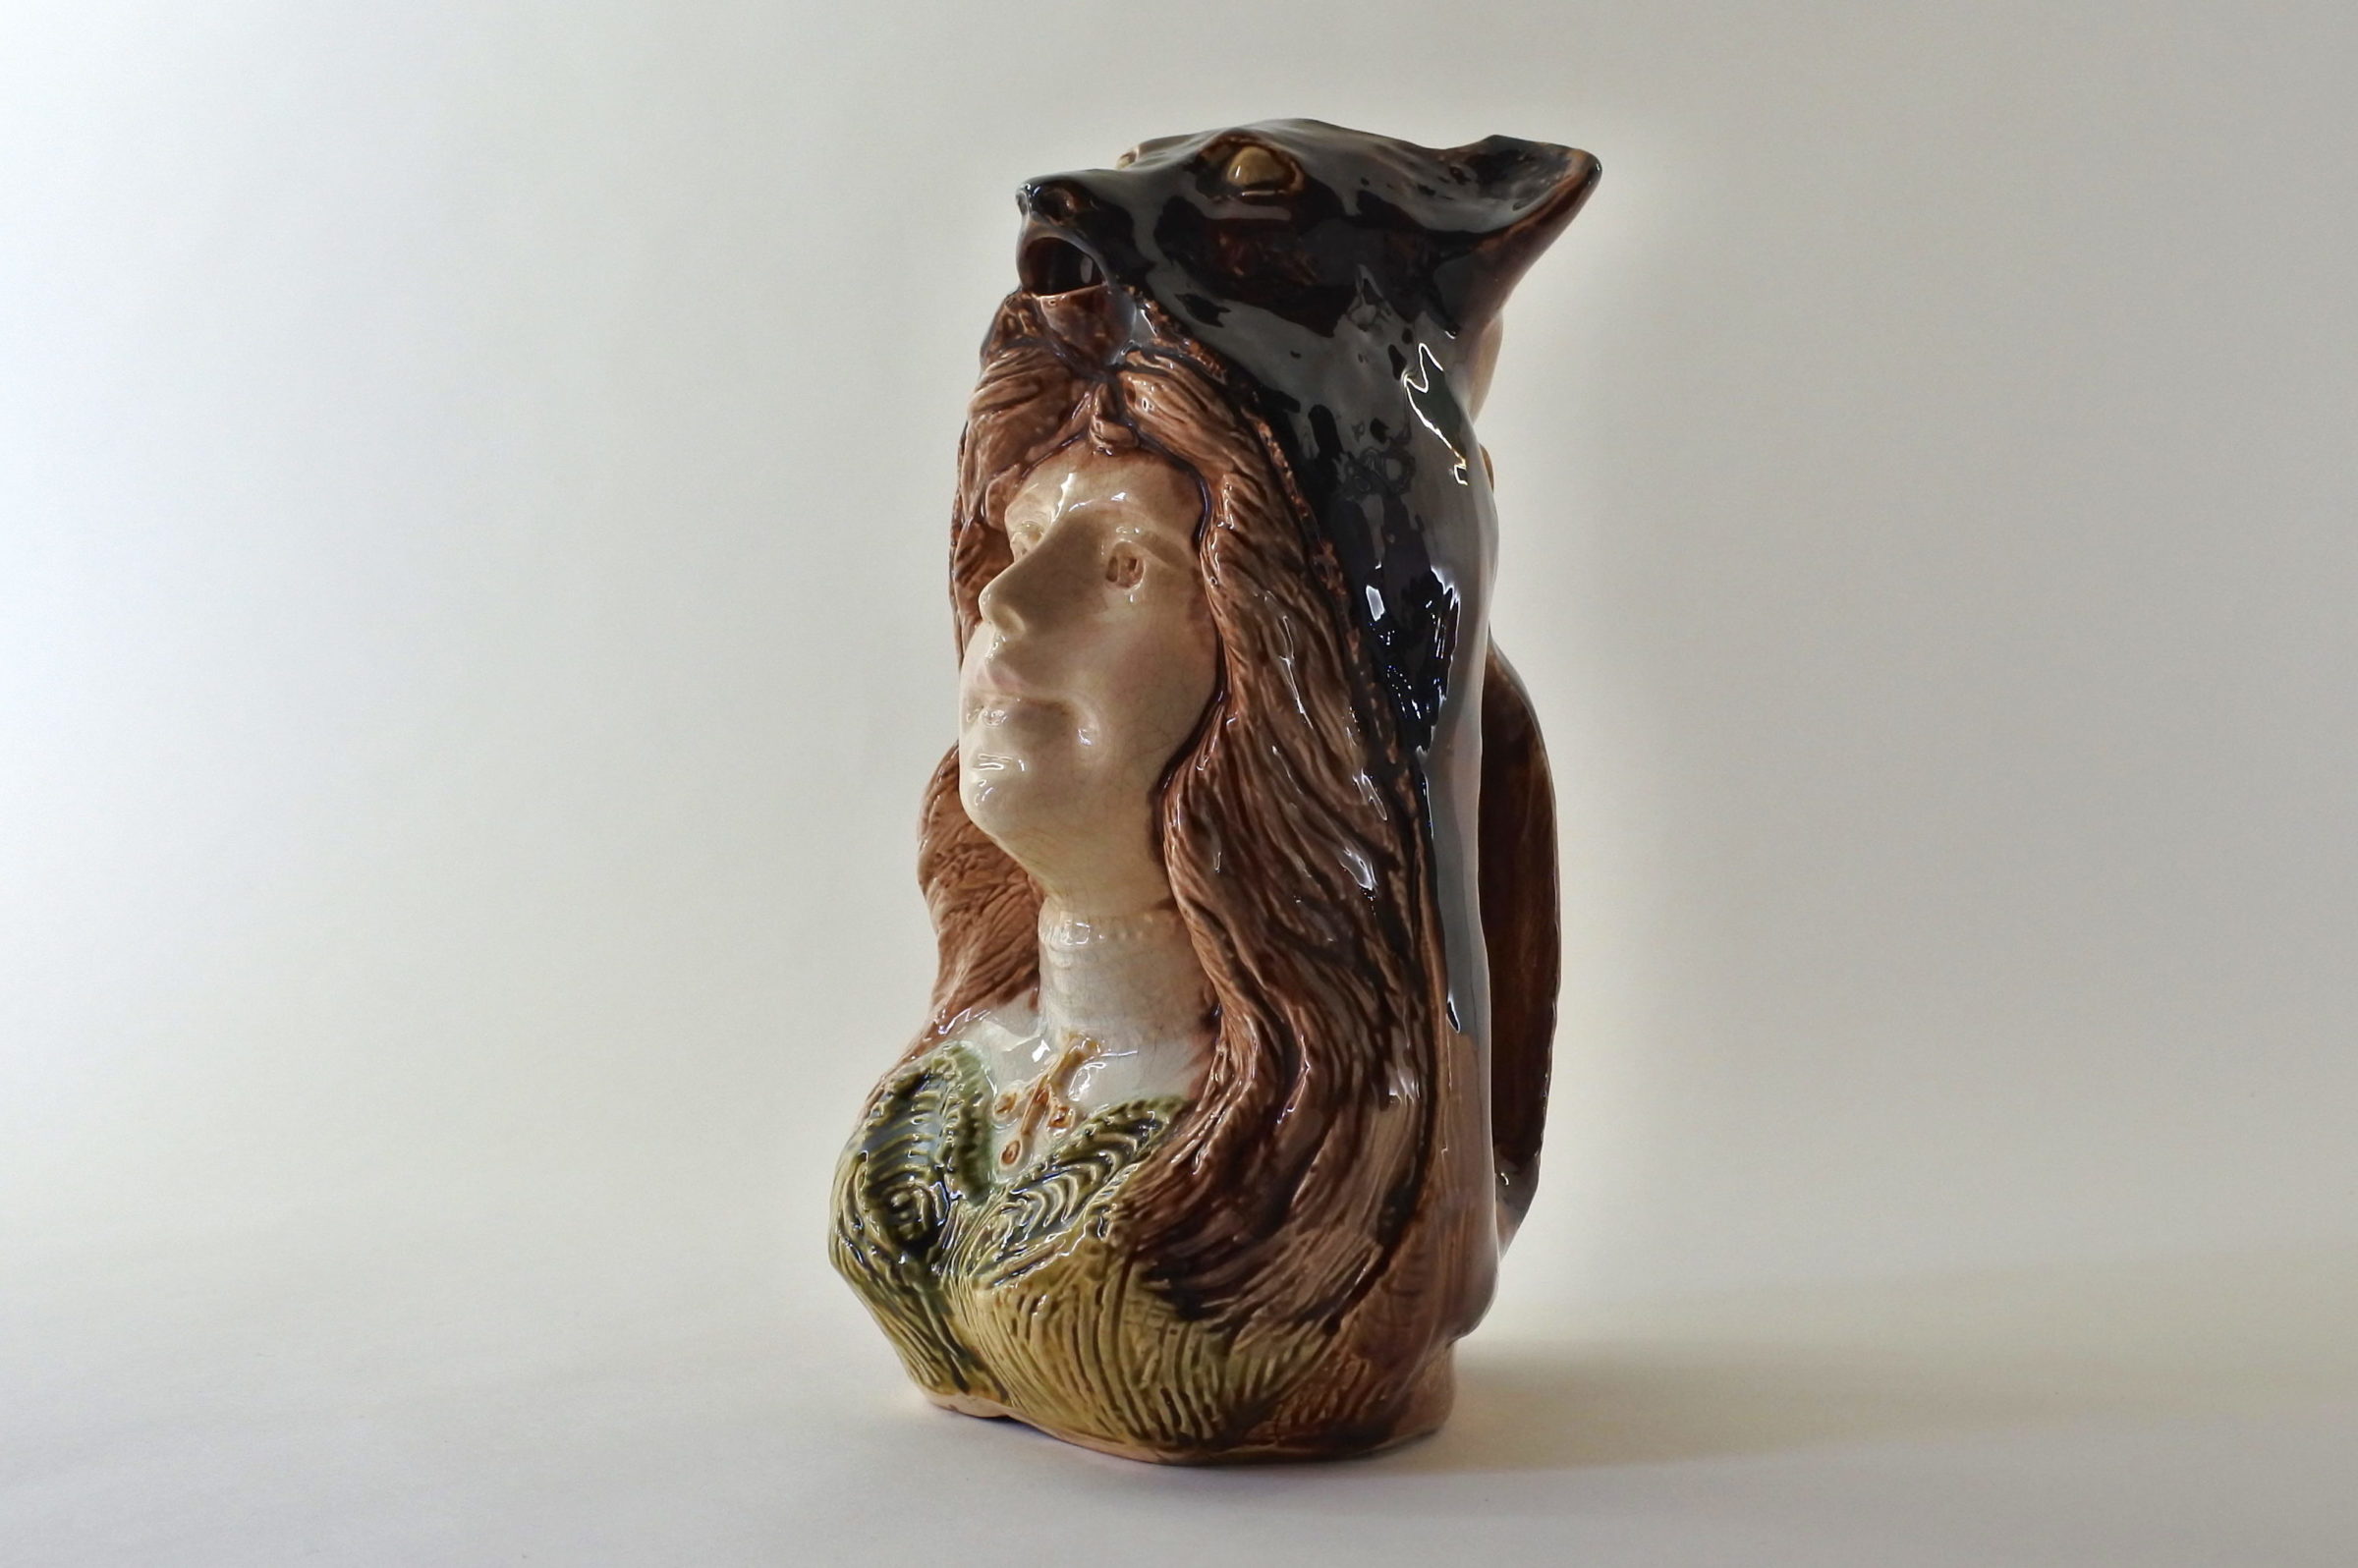 Brocca allegorica in ceramica barbotine - Marianne